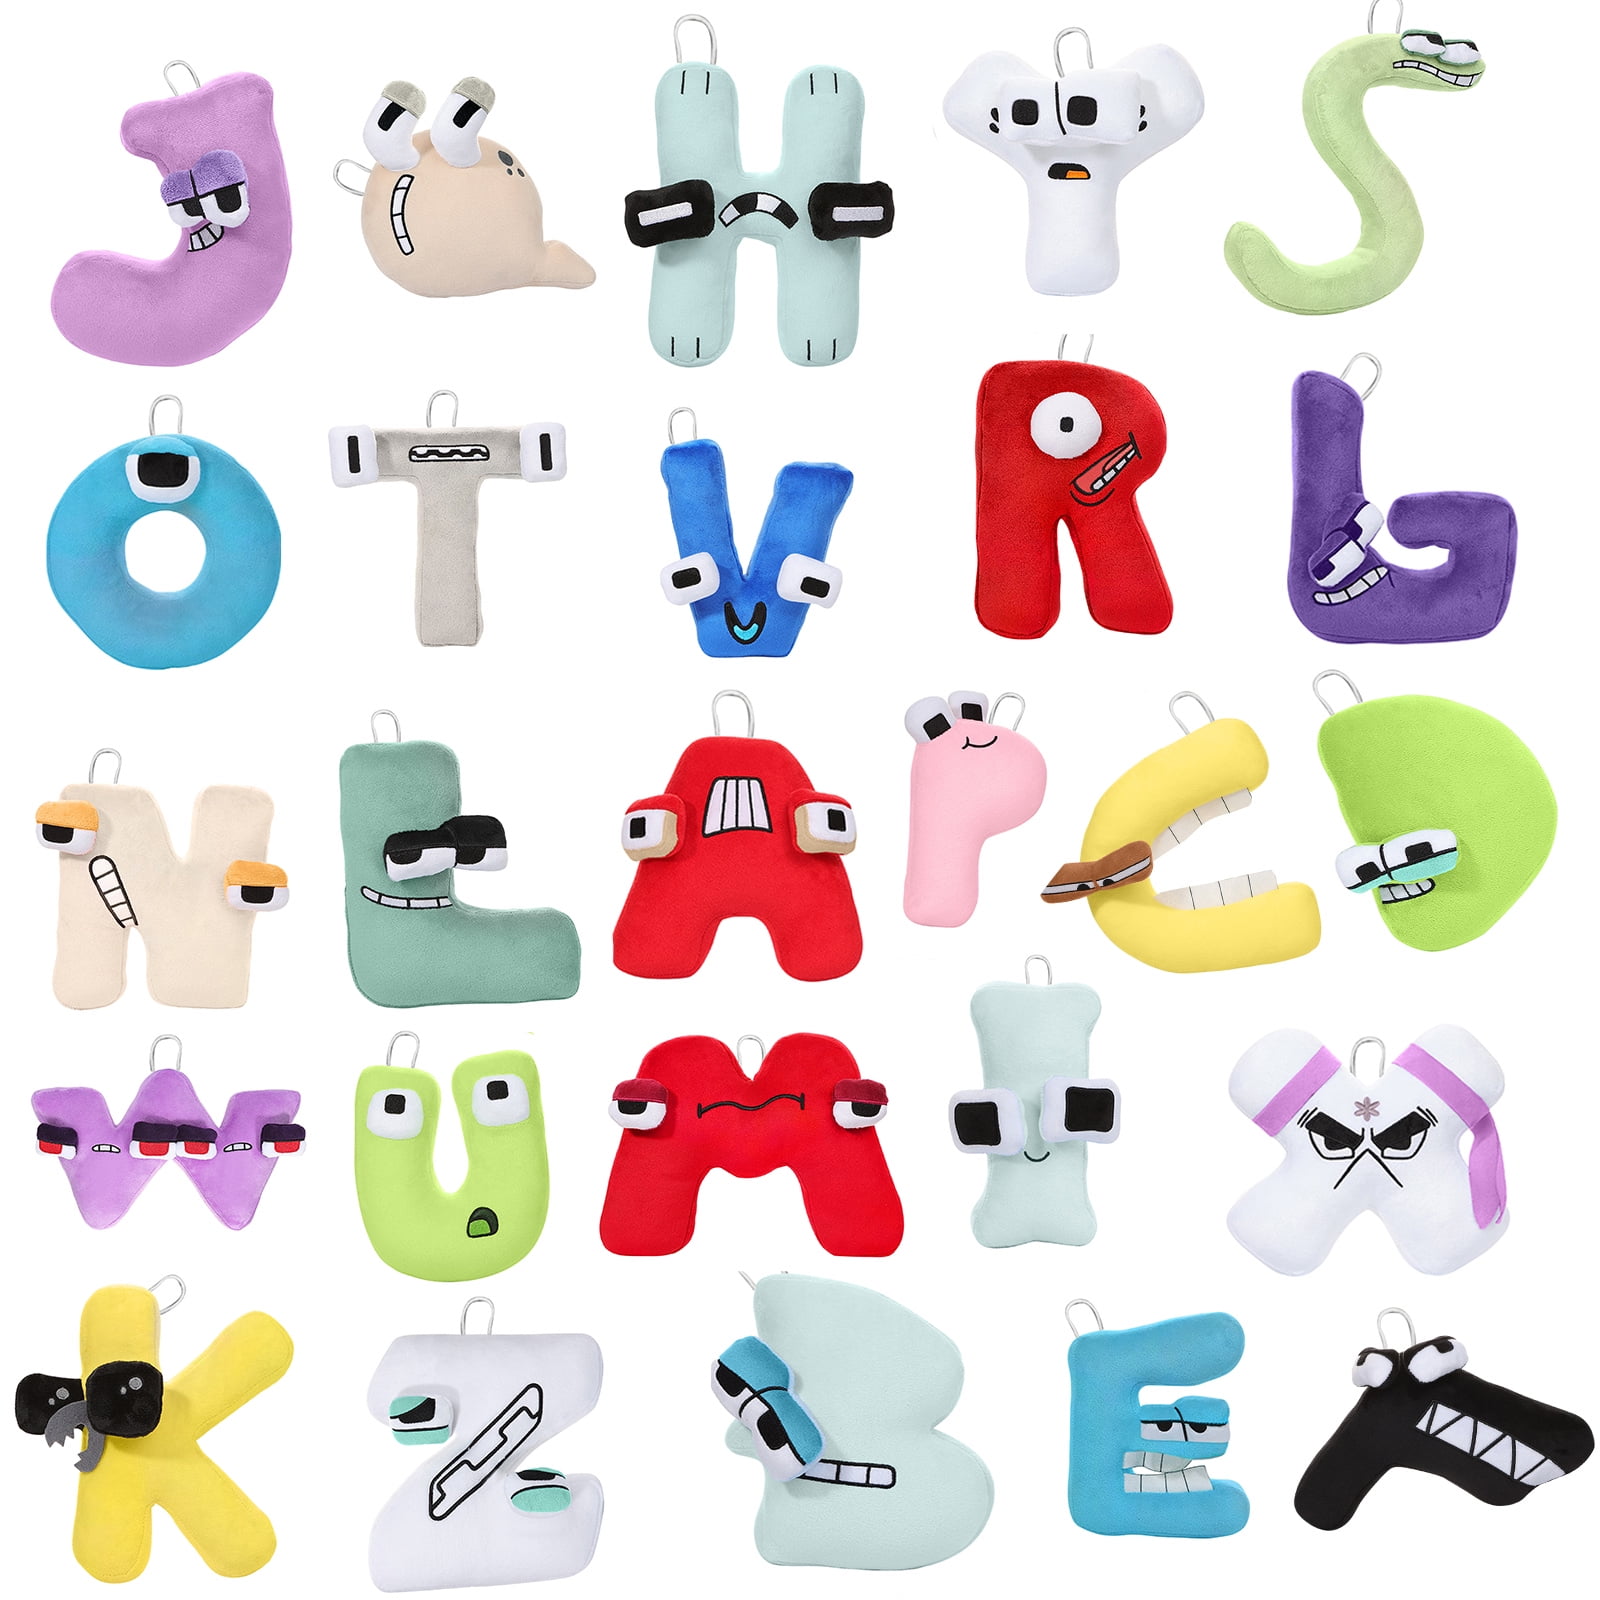  Alphabet Lore Plush,Alphabet Lore Plushies Stuffed Animal Doll  Toys,Kids Birthday Party Favor Preferred Gift for Holidays,Birthdays (F) :  Toys & Games